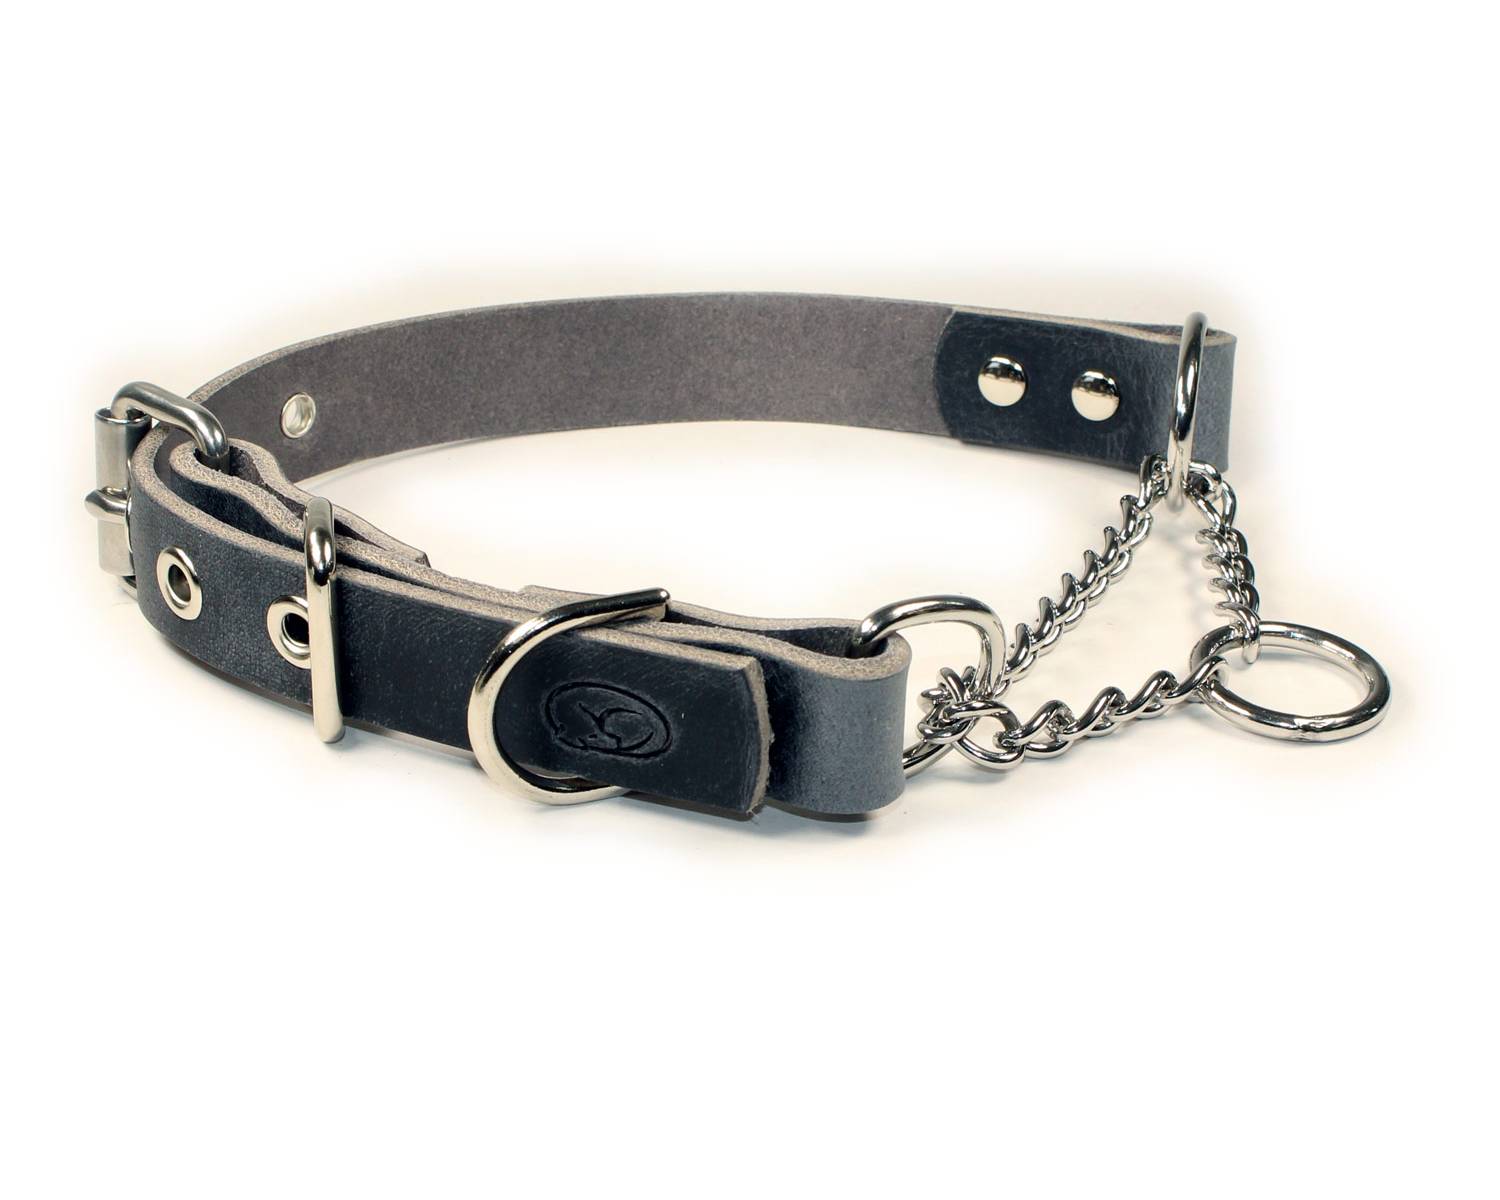  Puppy Leather Collar, Adjustable Basic Collar, Check